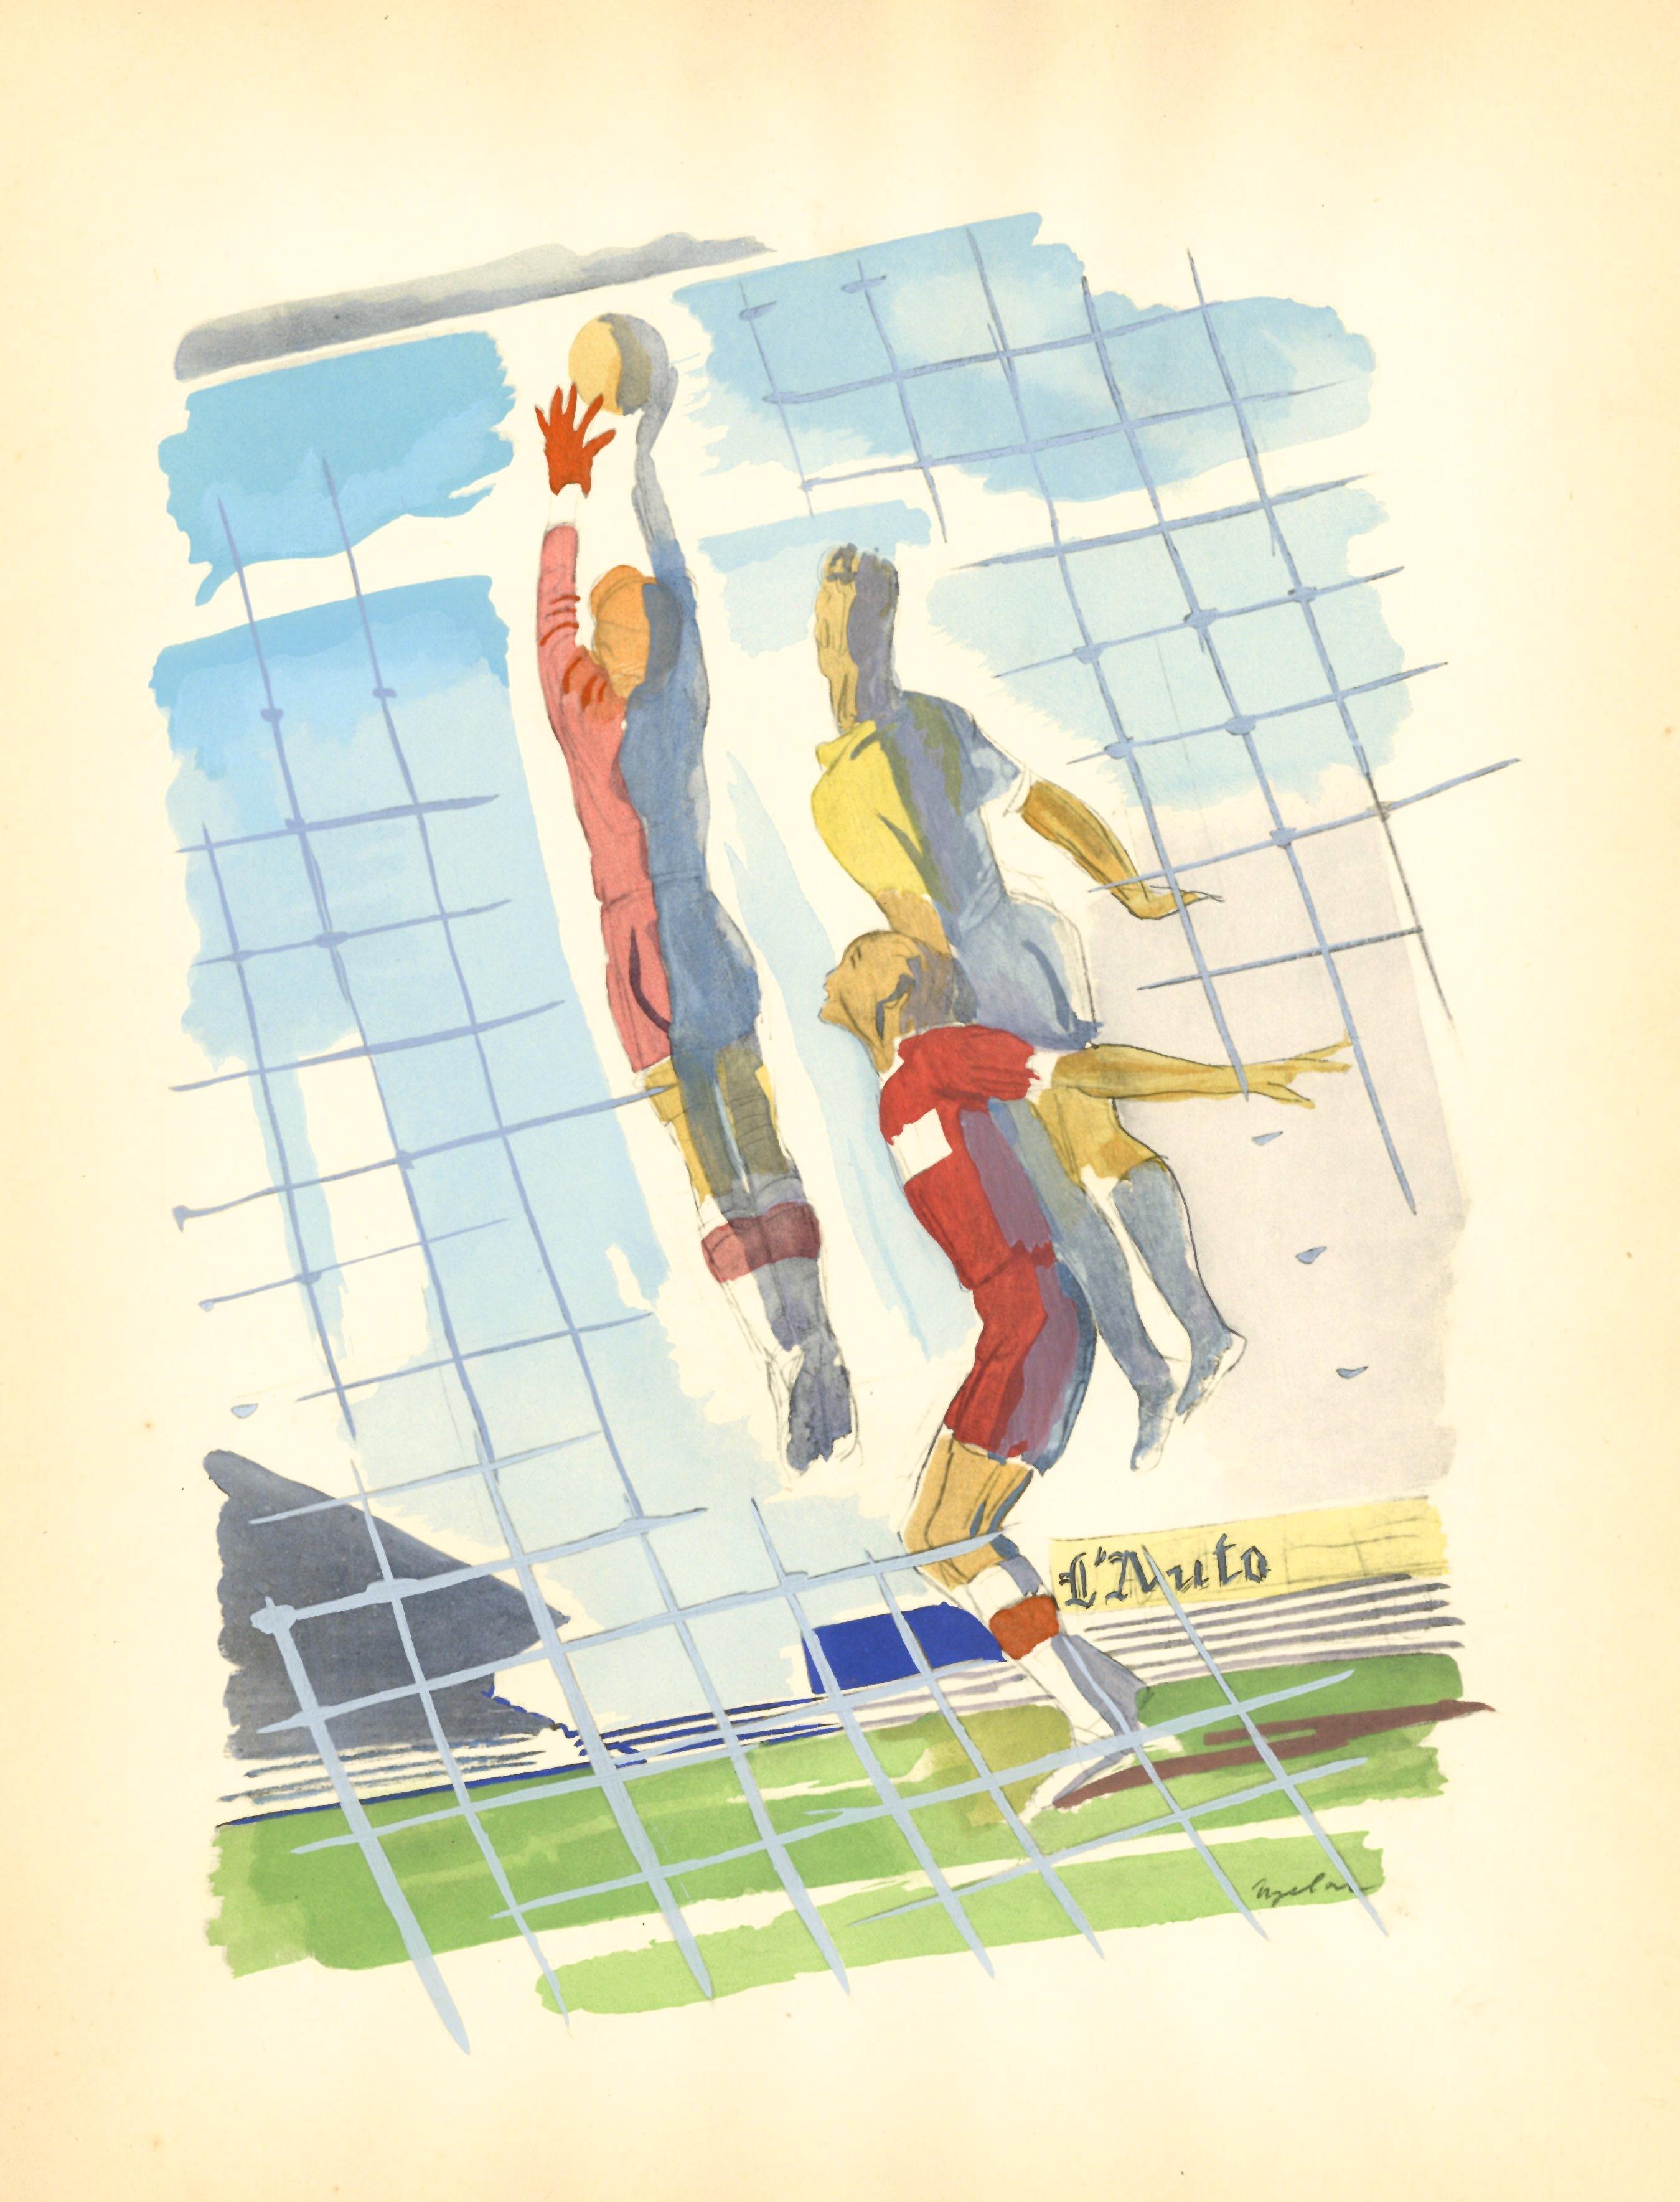 "Le Football" pochoir for Les Joies du Sport - Soccer - Print by Milivoy Uzelac